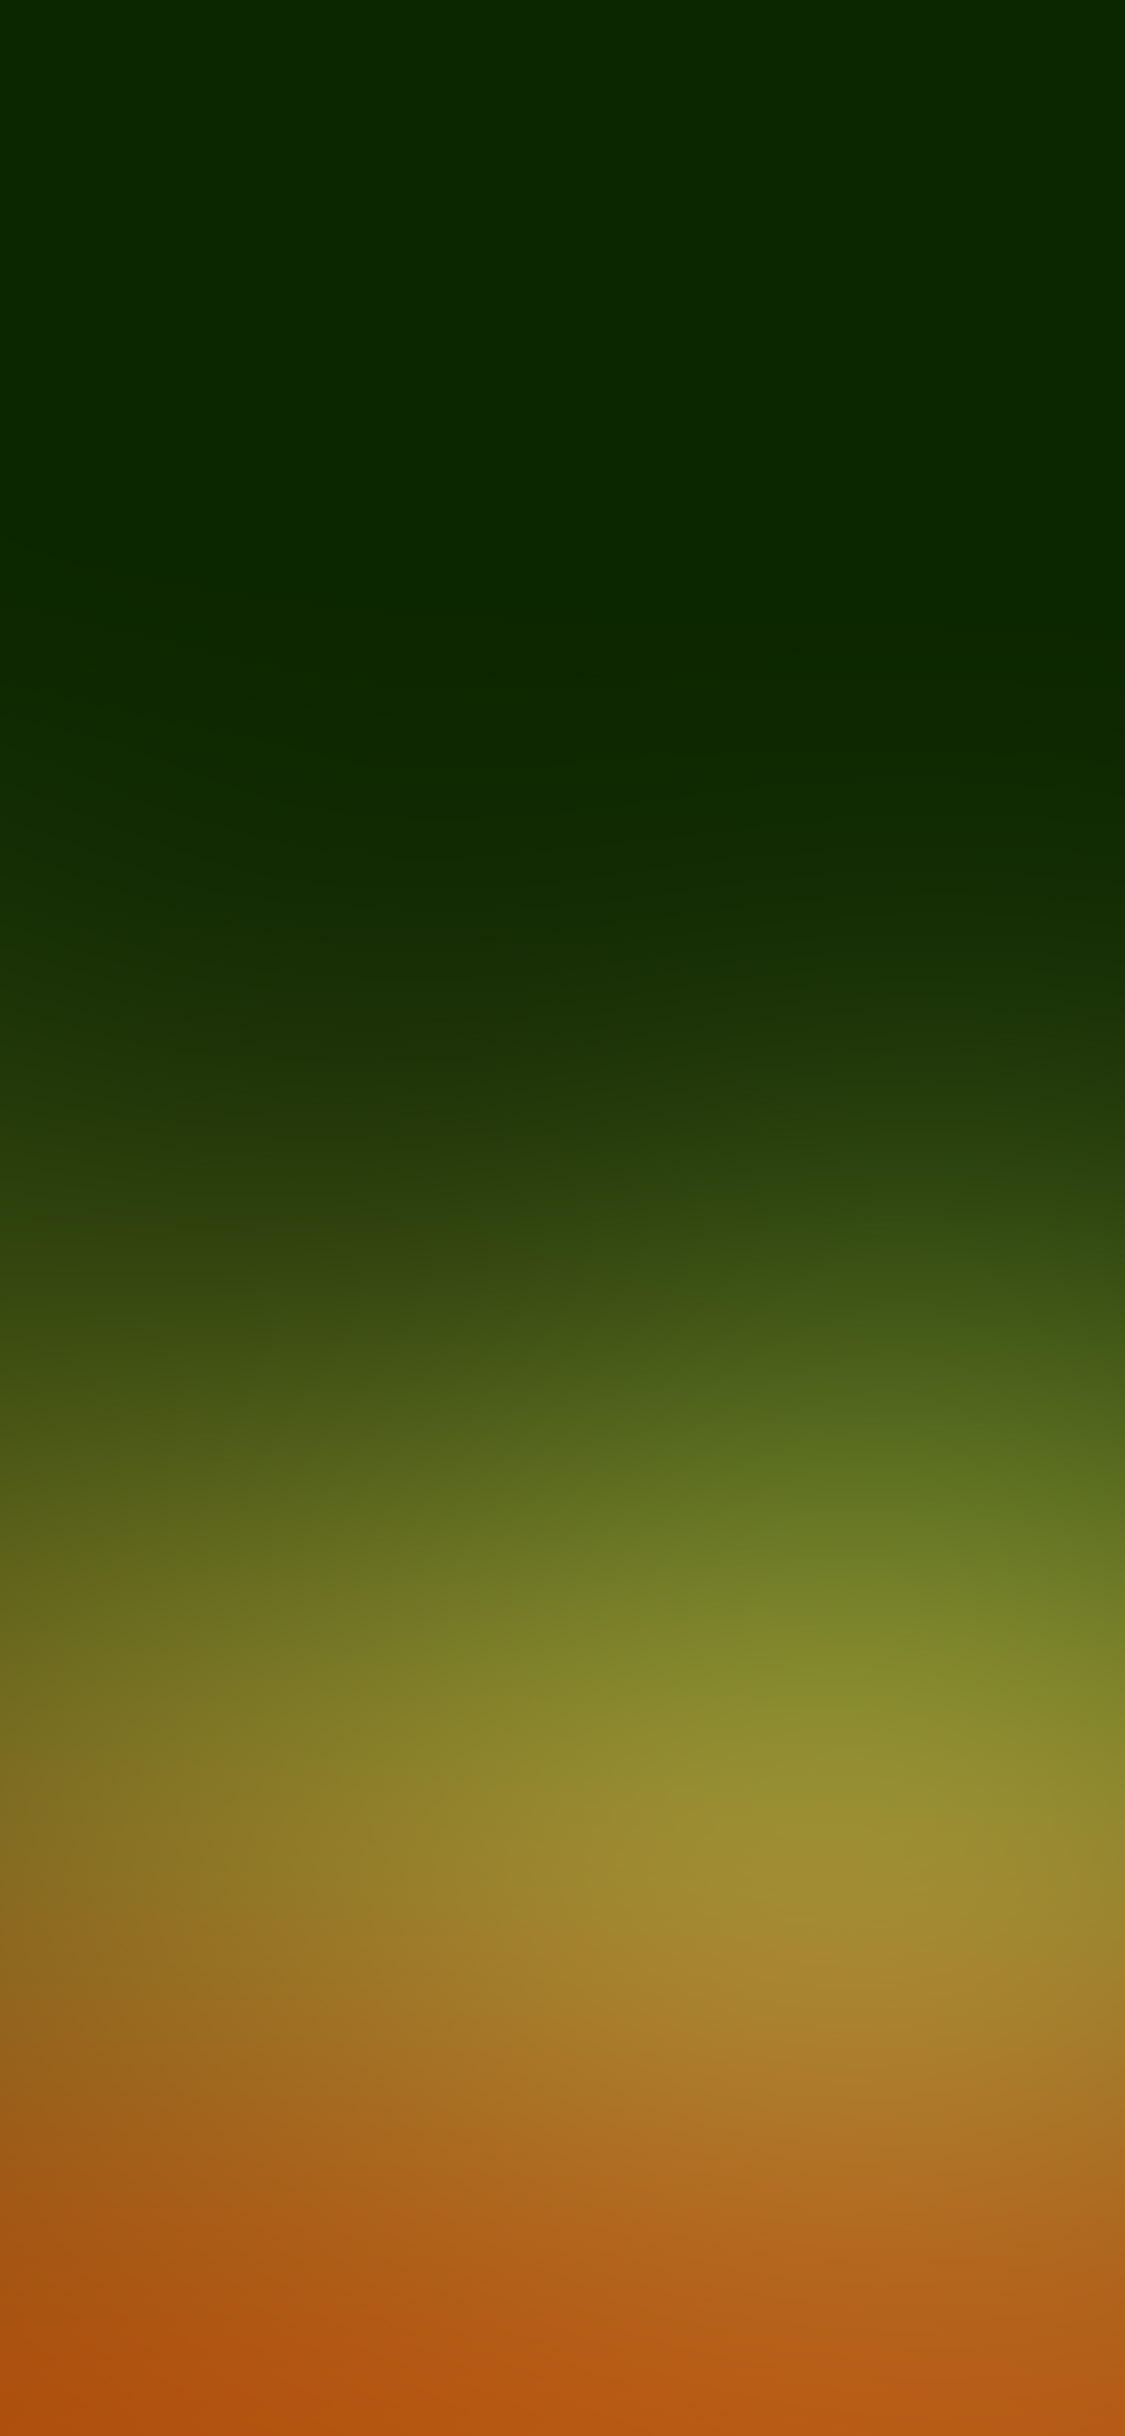 1125x2436 sn39-orange-fire-green-blur-gradation-wallpaper